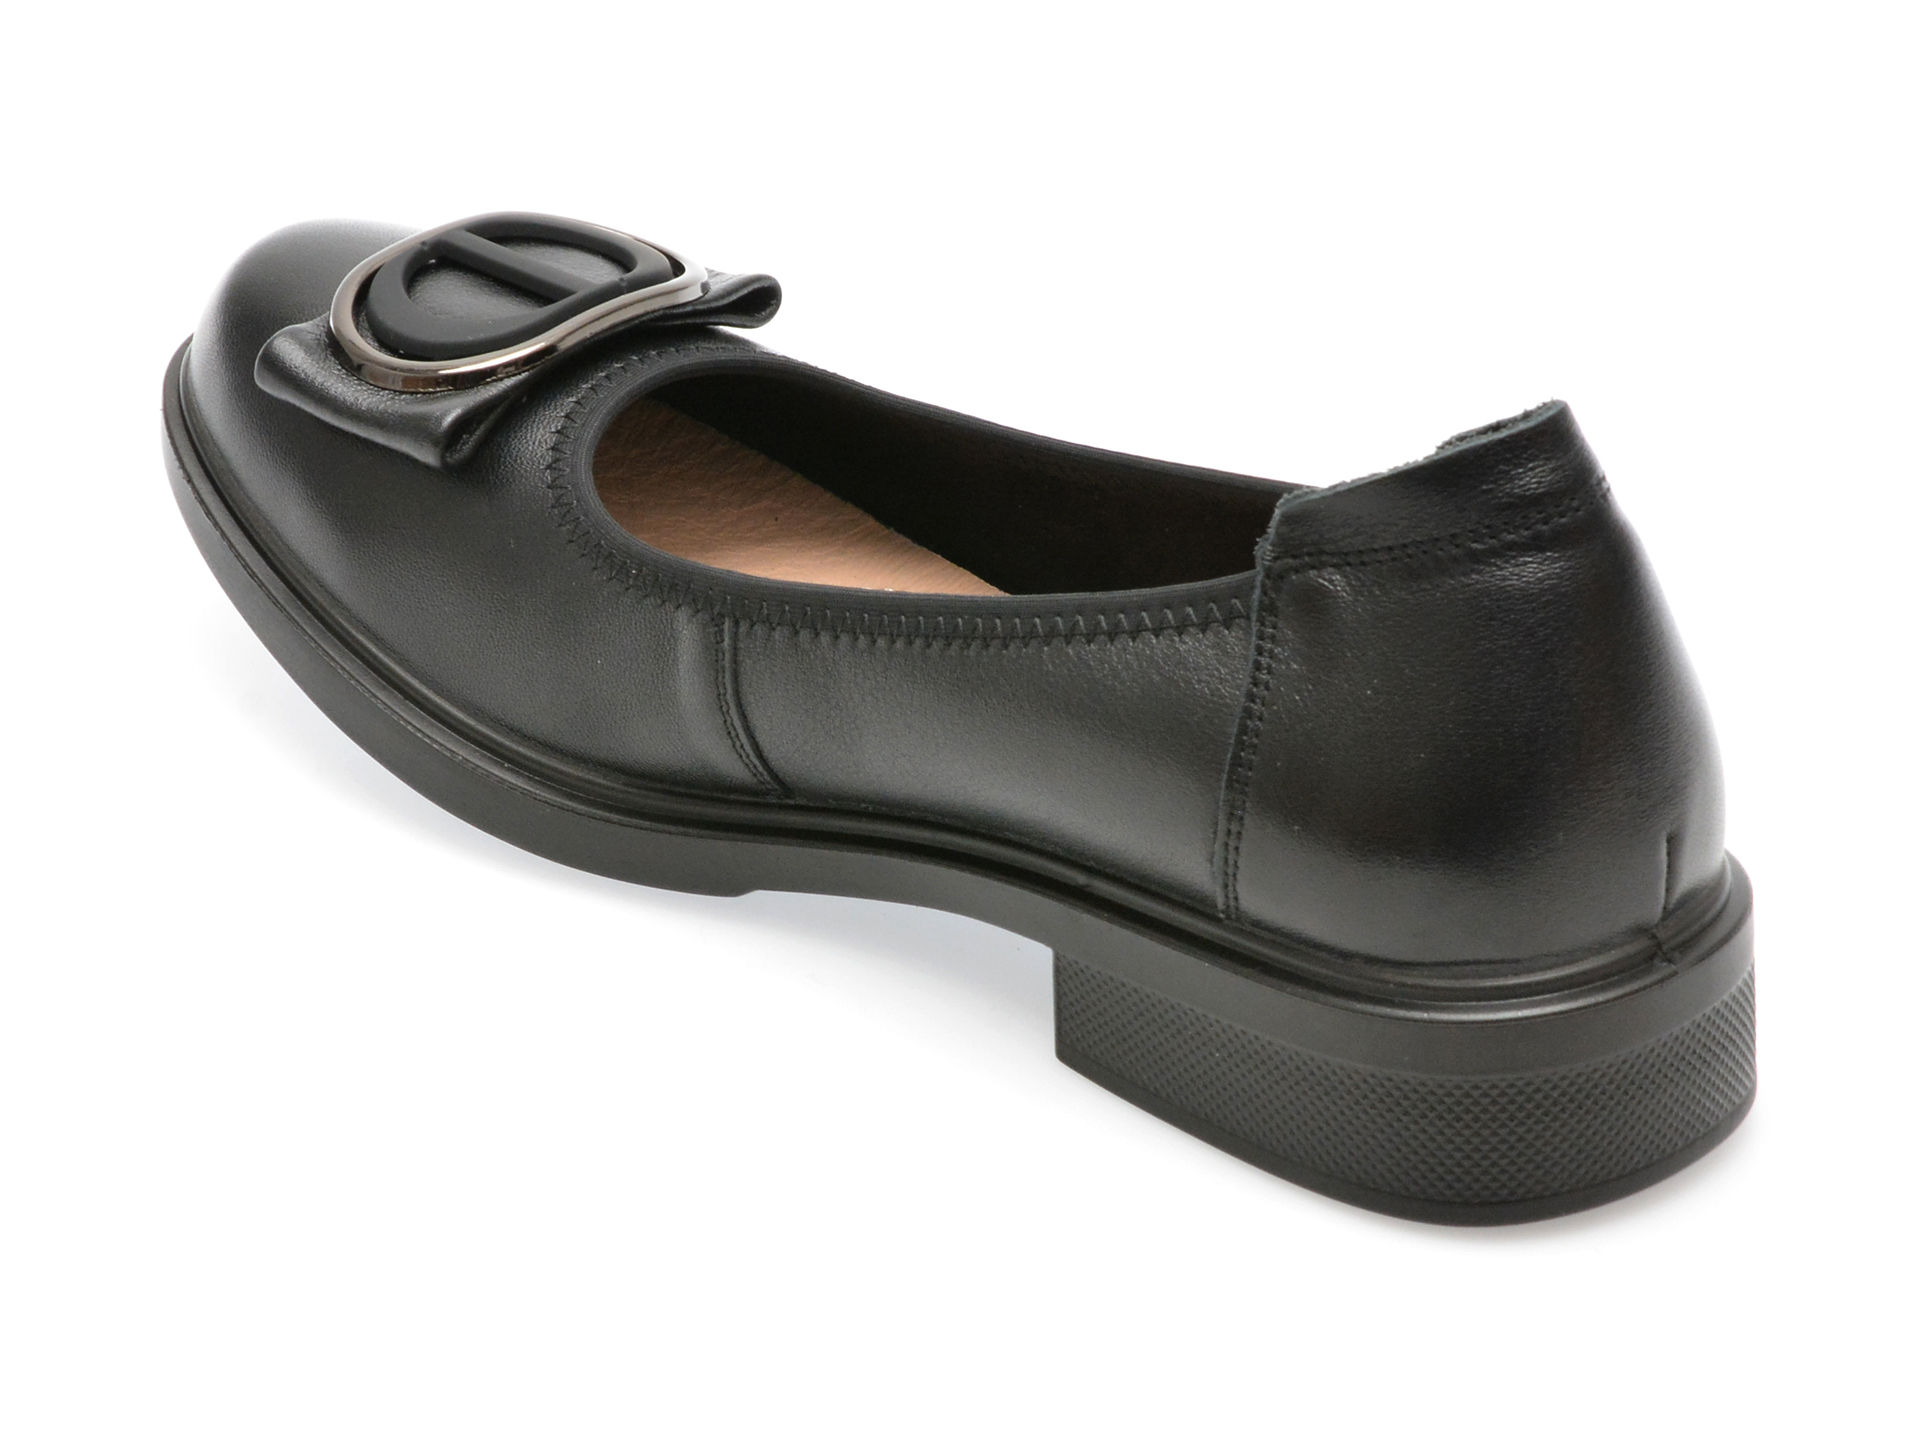 Poze Pantofi GRYXX negri, 3620, din piele naturala